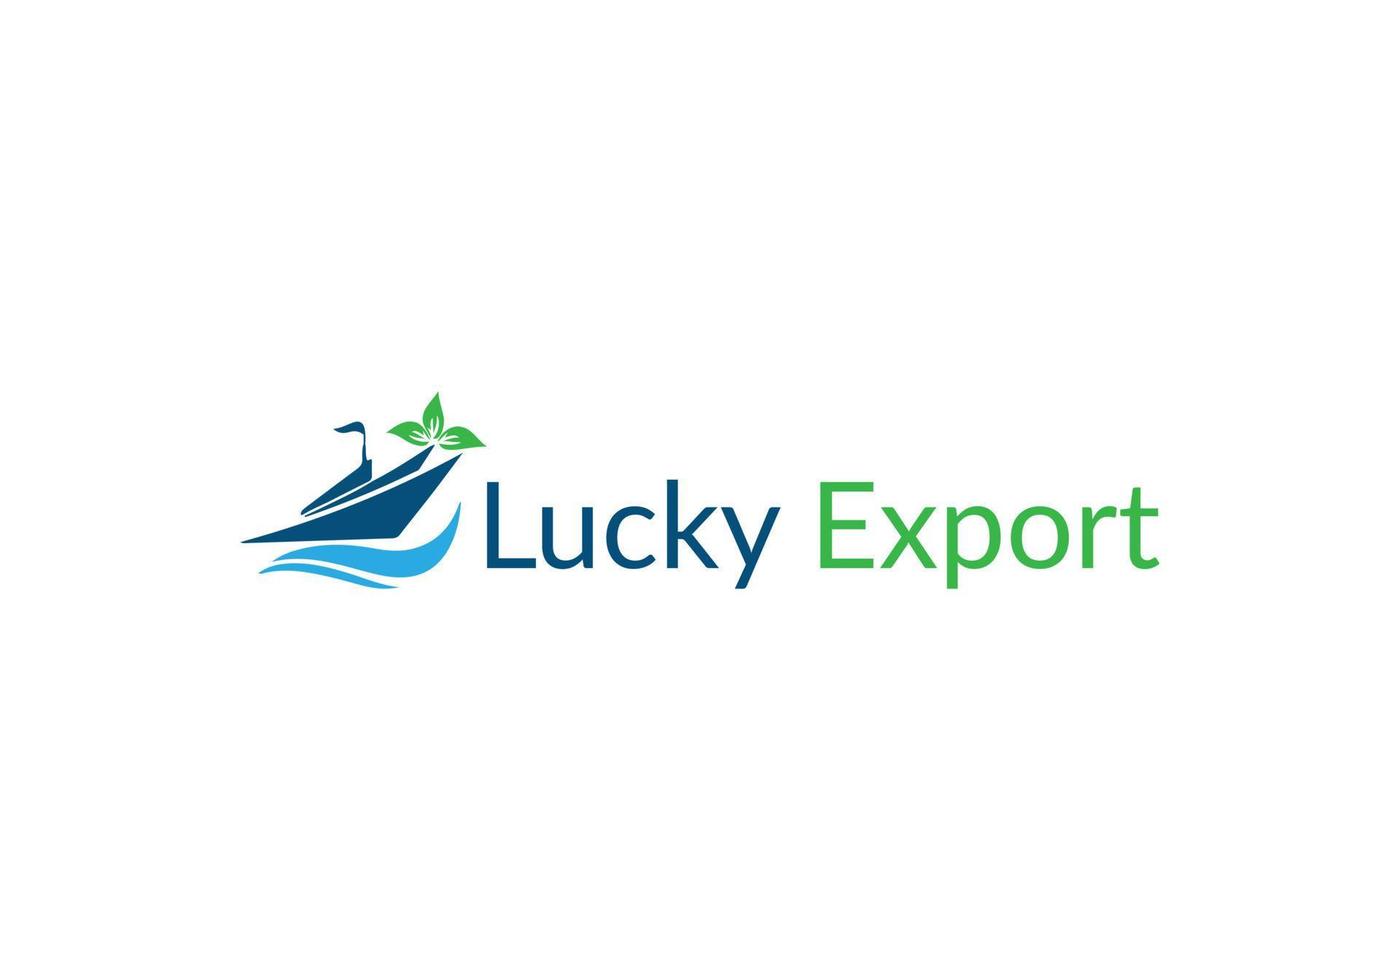 Abstract Ship emblem export logo design template vector